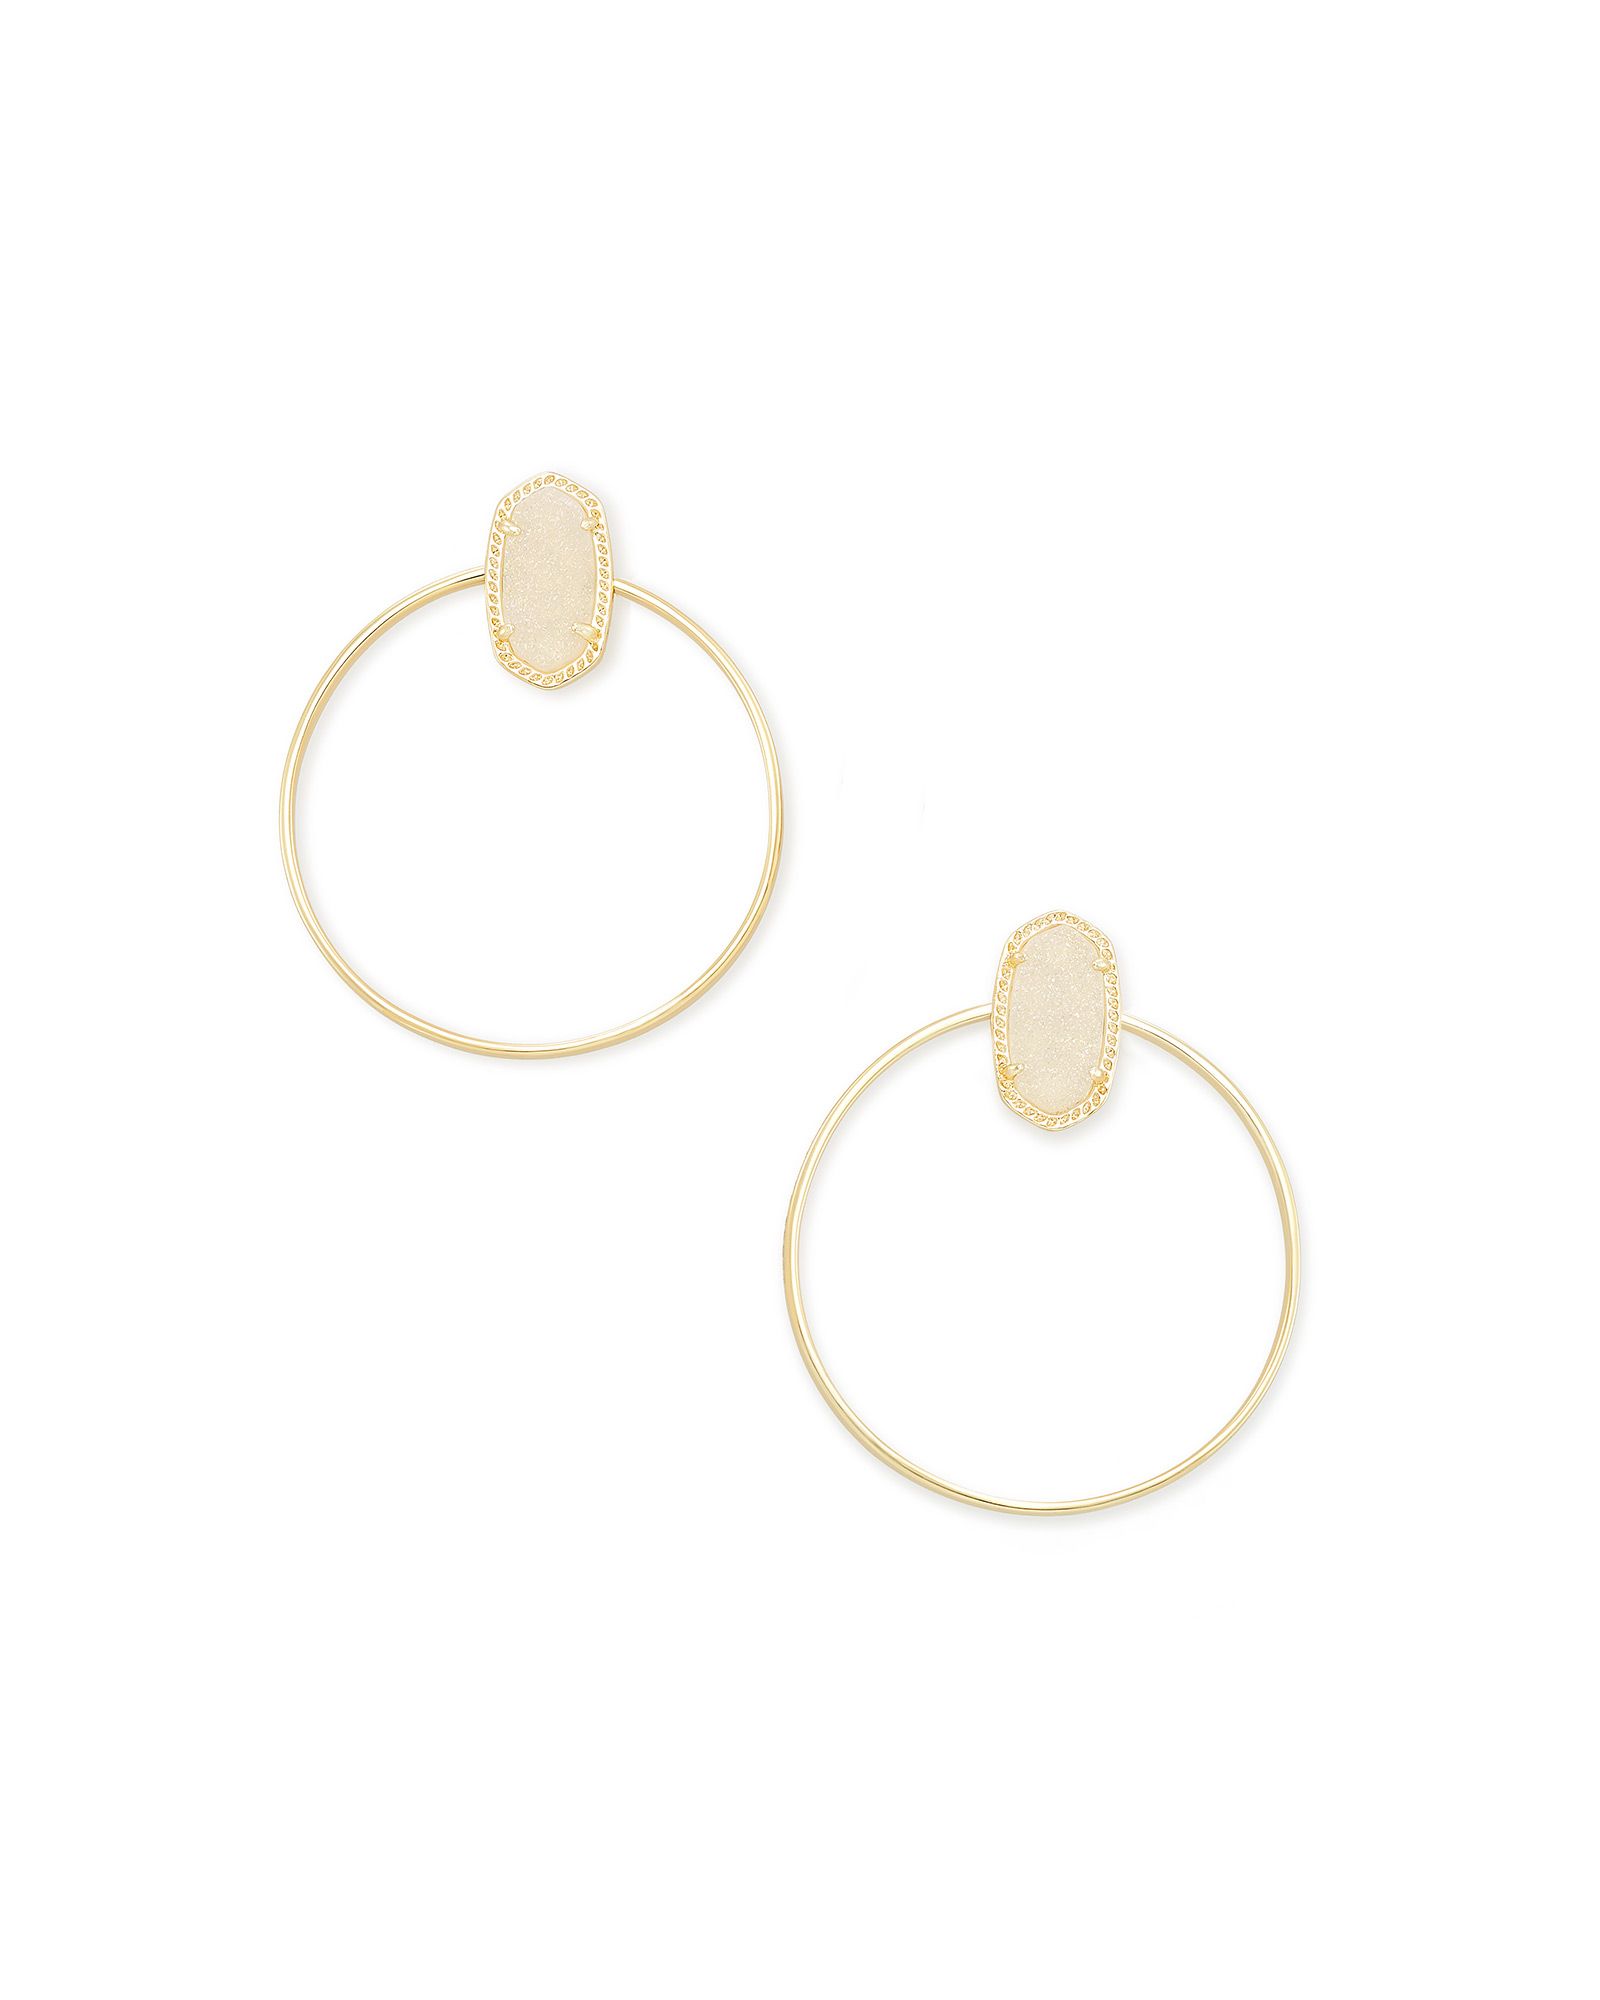 Mayra Gold Hoop Earrings in Iridescent Drusy | Kendra Scott